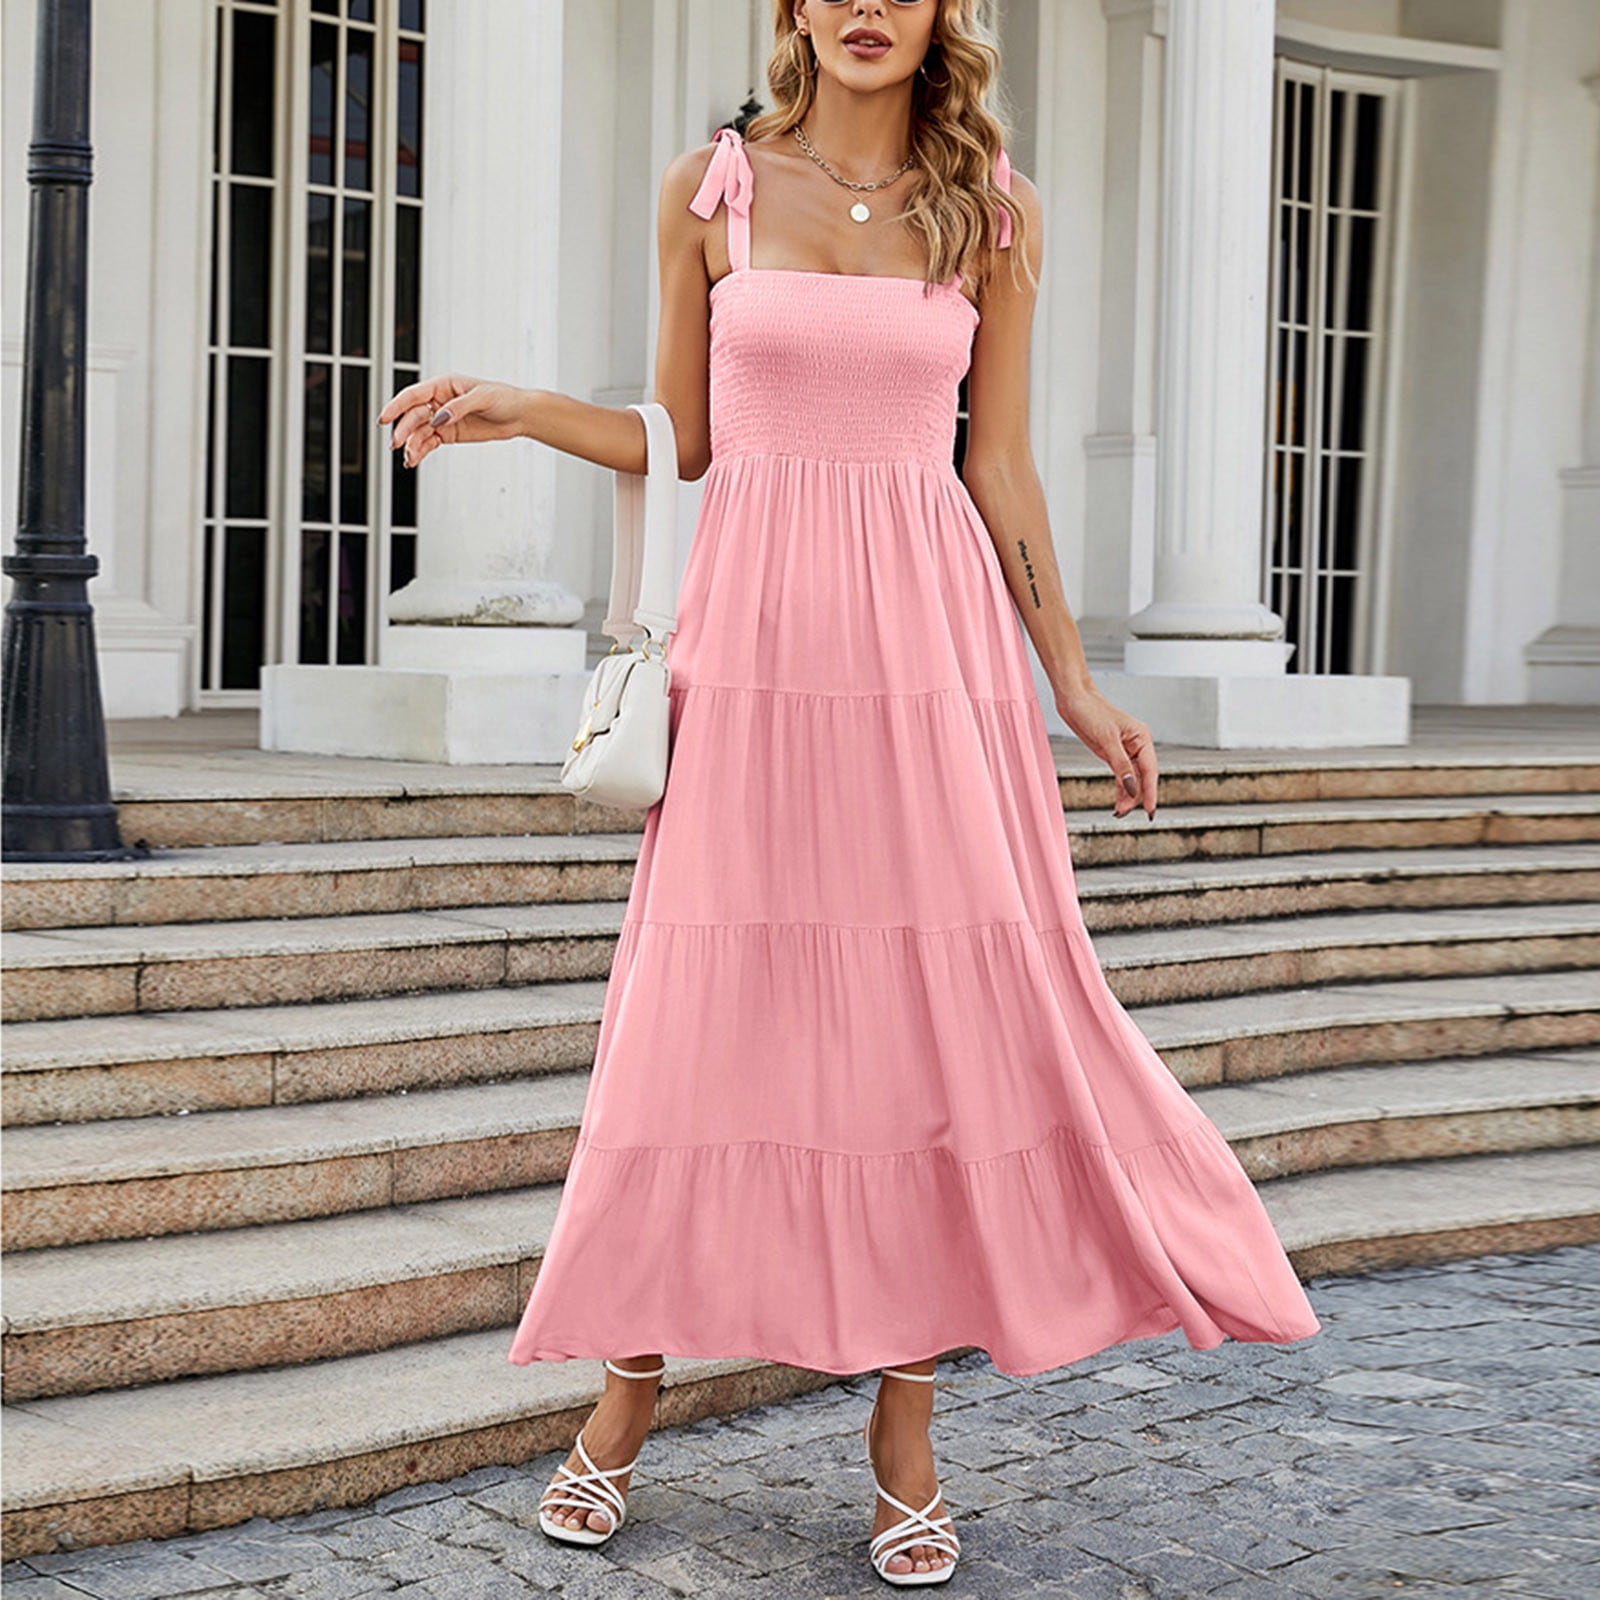 petite pink dress